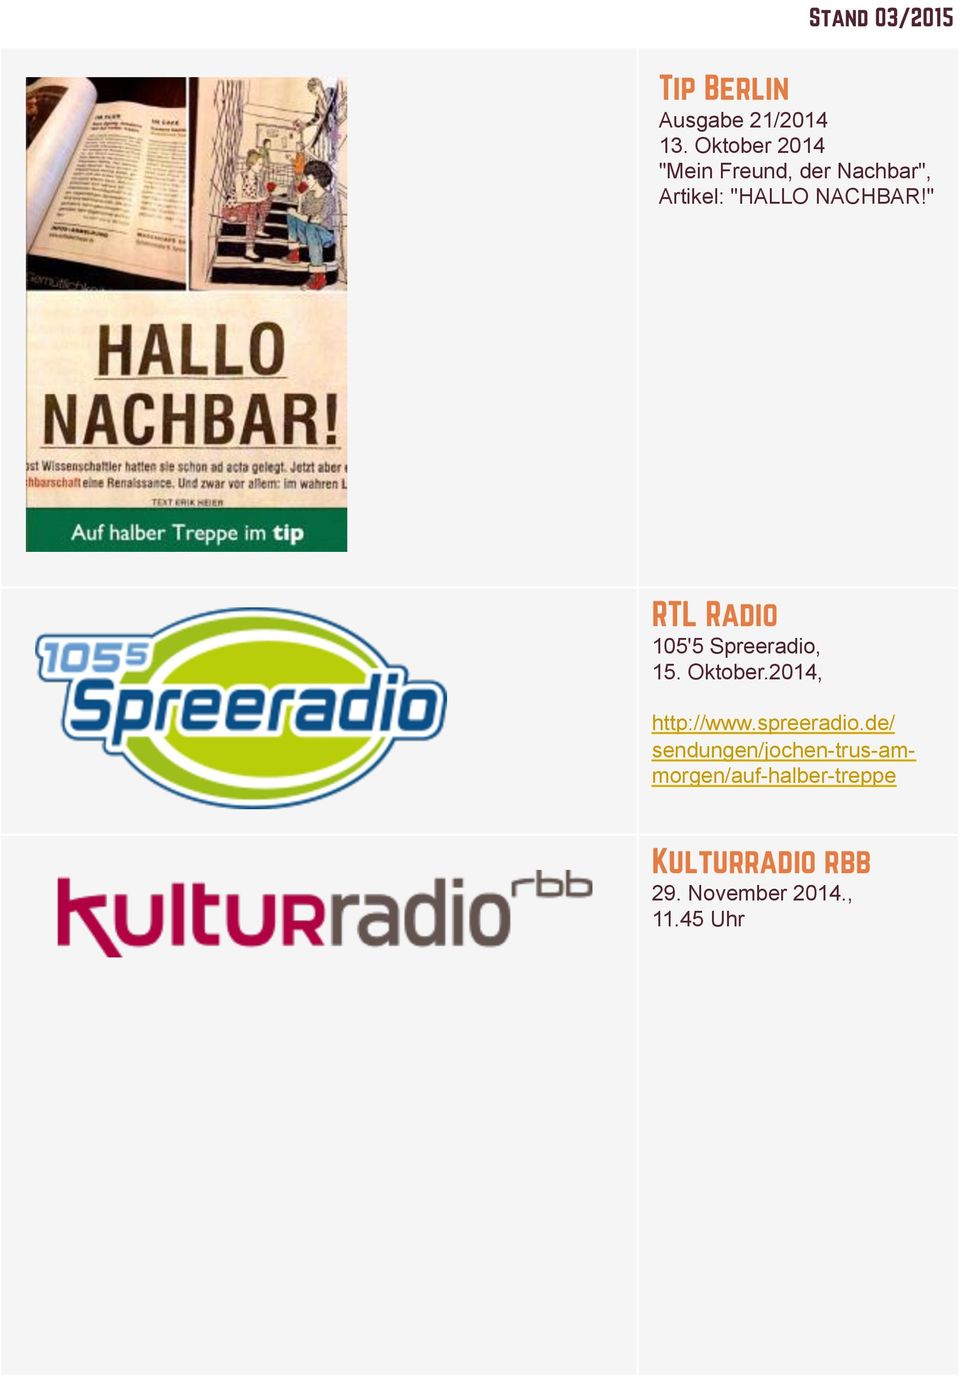 " RTL Radio 105'5 Spreeradio, 15. Oktober.2014, http://www.